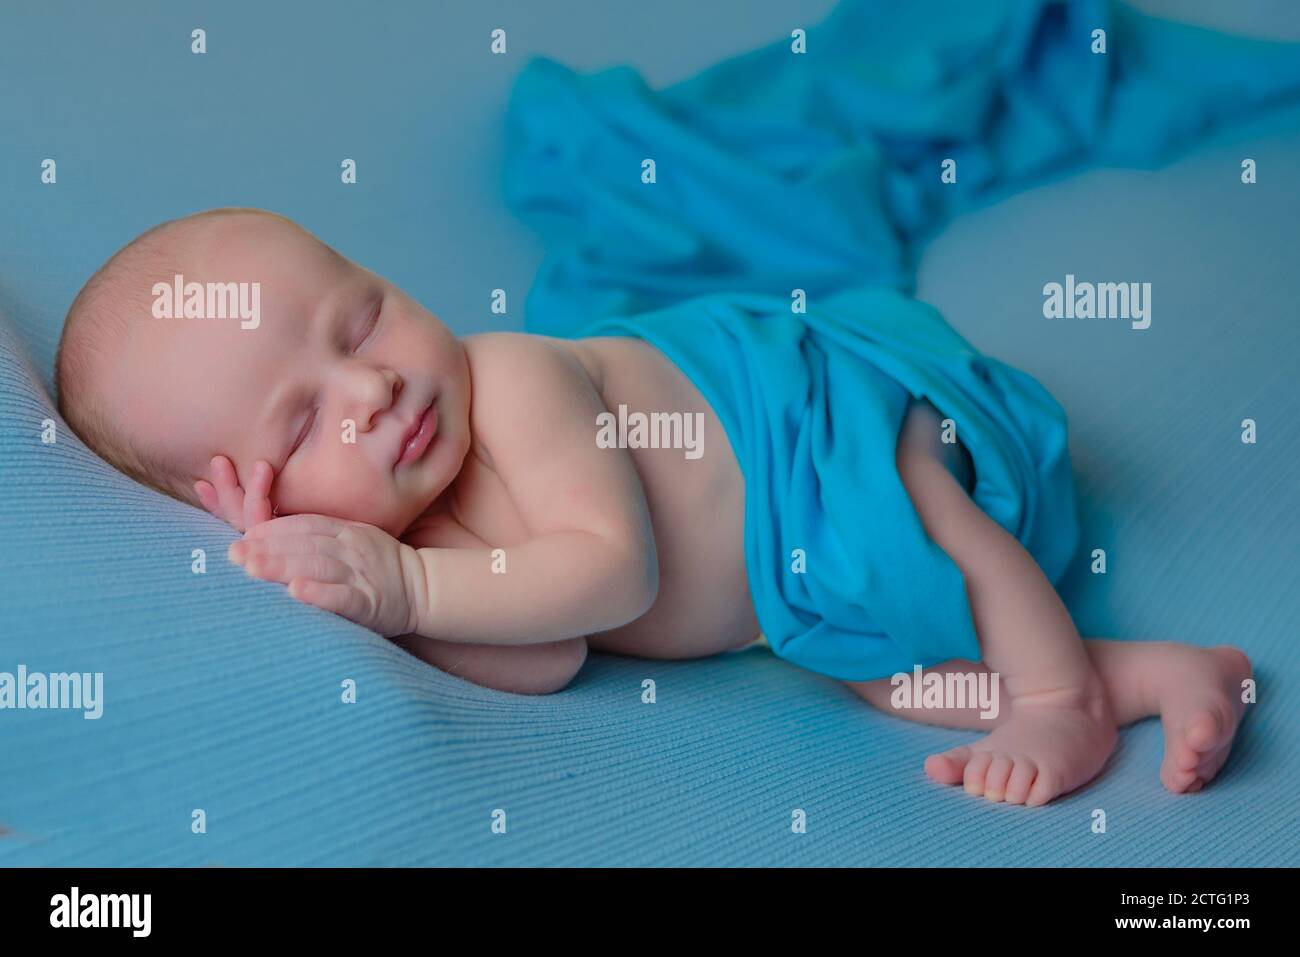 Newborn sleeping baby boy on a blue blanket. Stock Photo